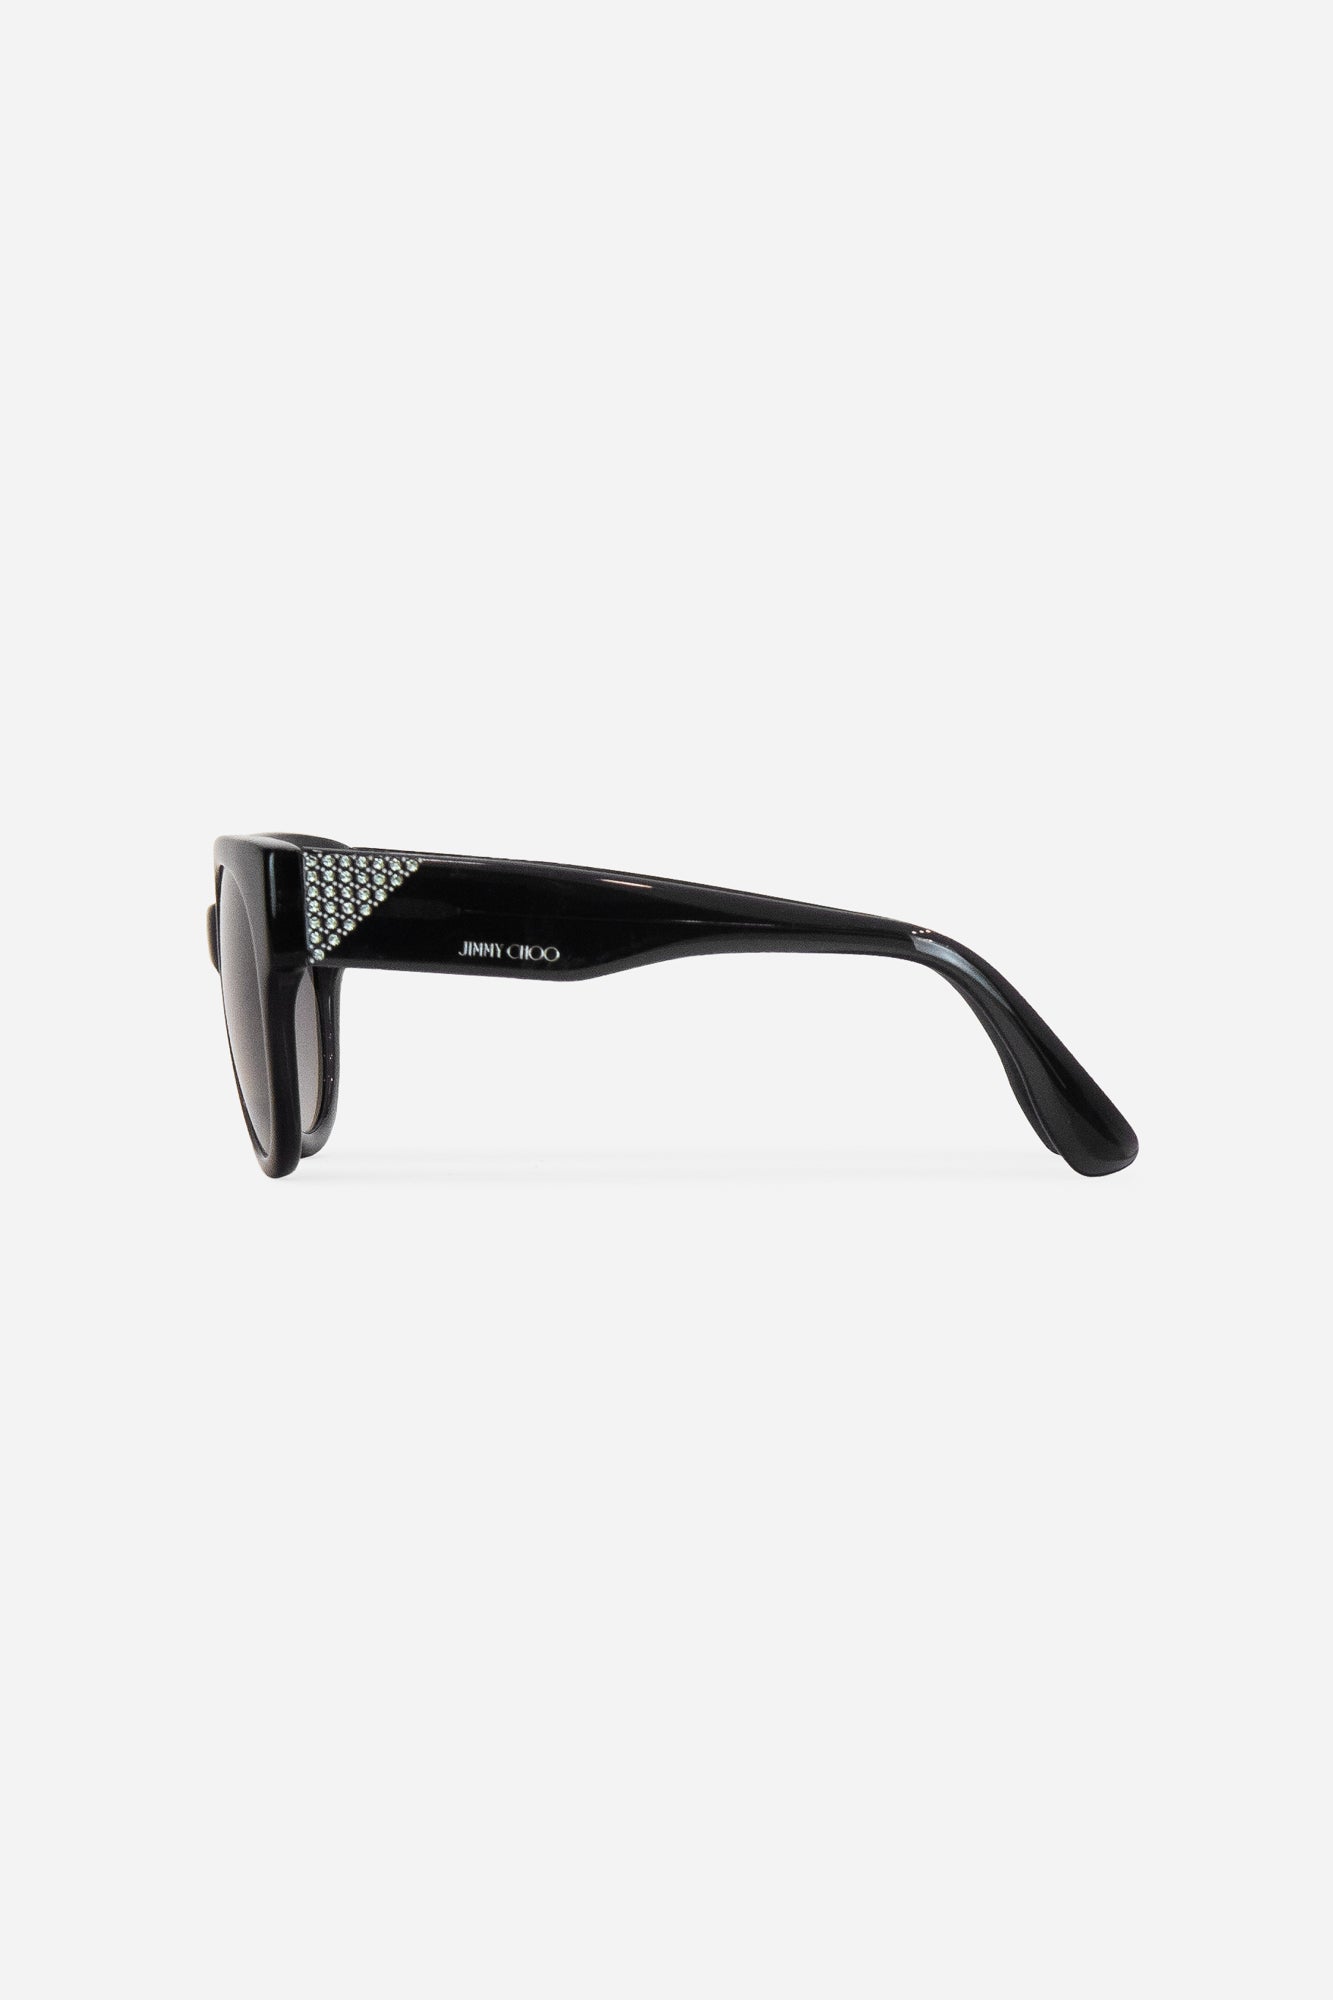 Black Round Square Edge Frame With Dimond Corner Arm Sunglasses